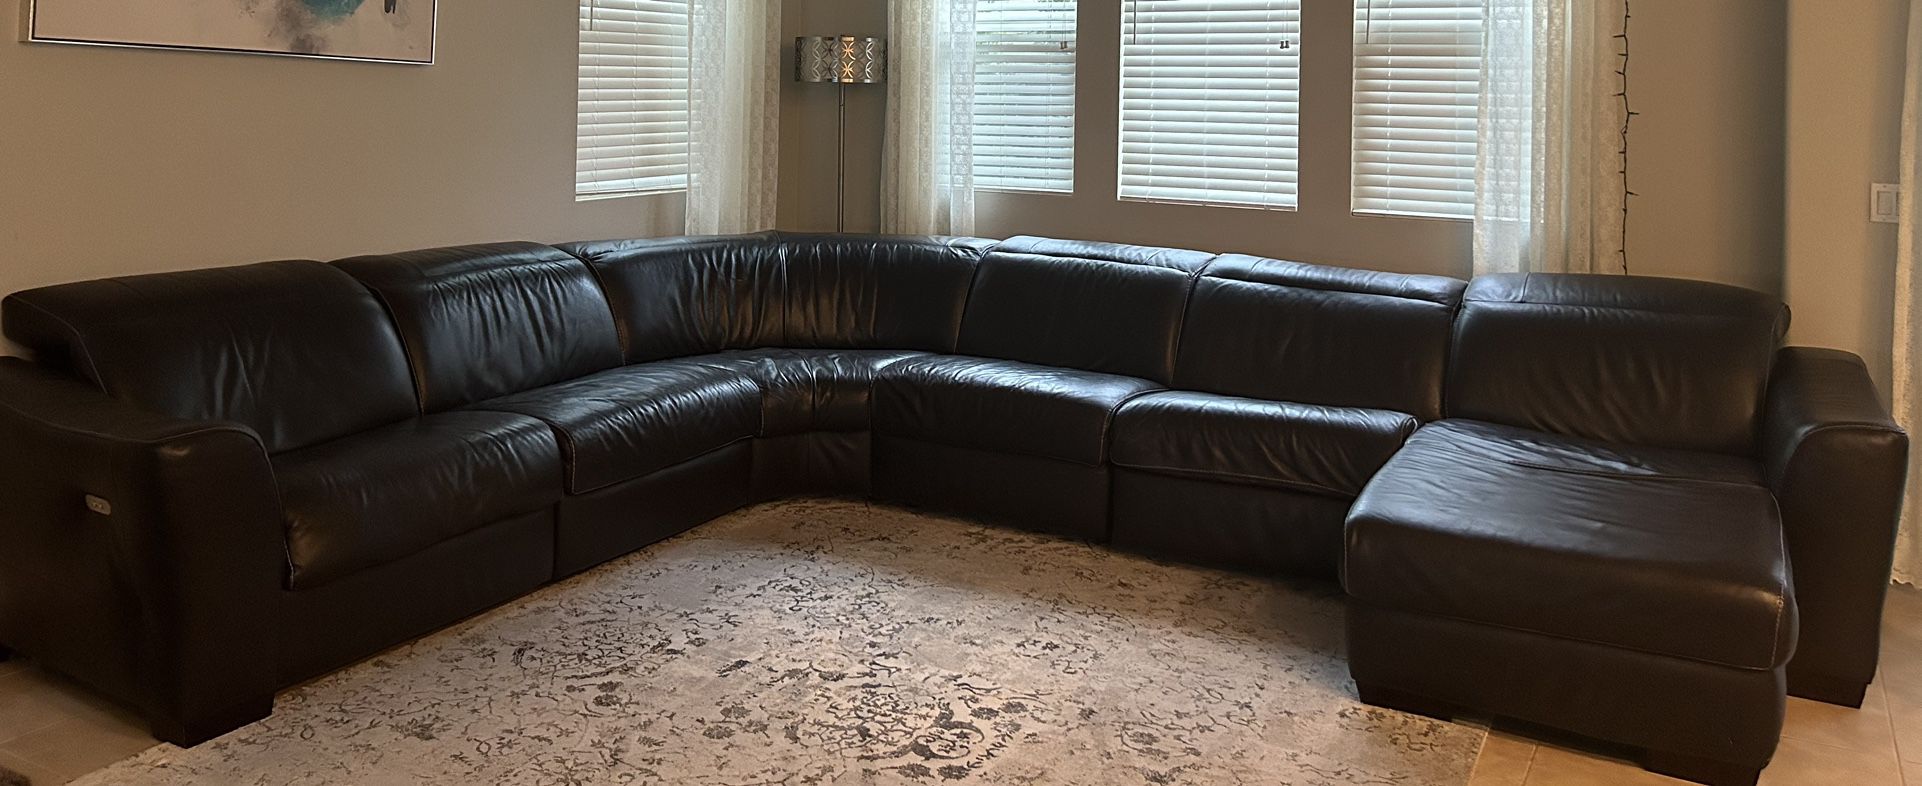 Macys Sectional Leather Sofa